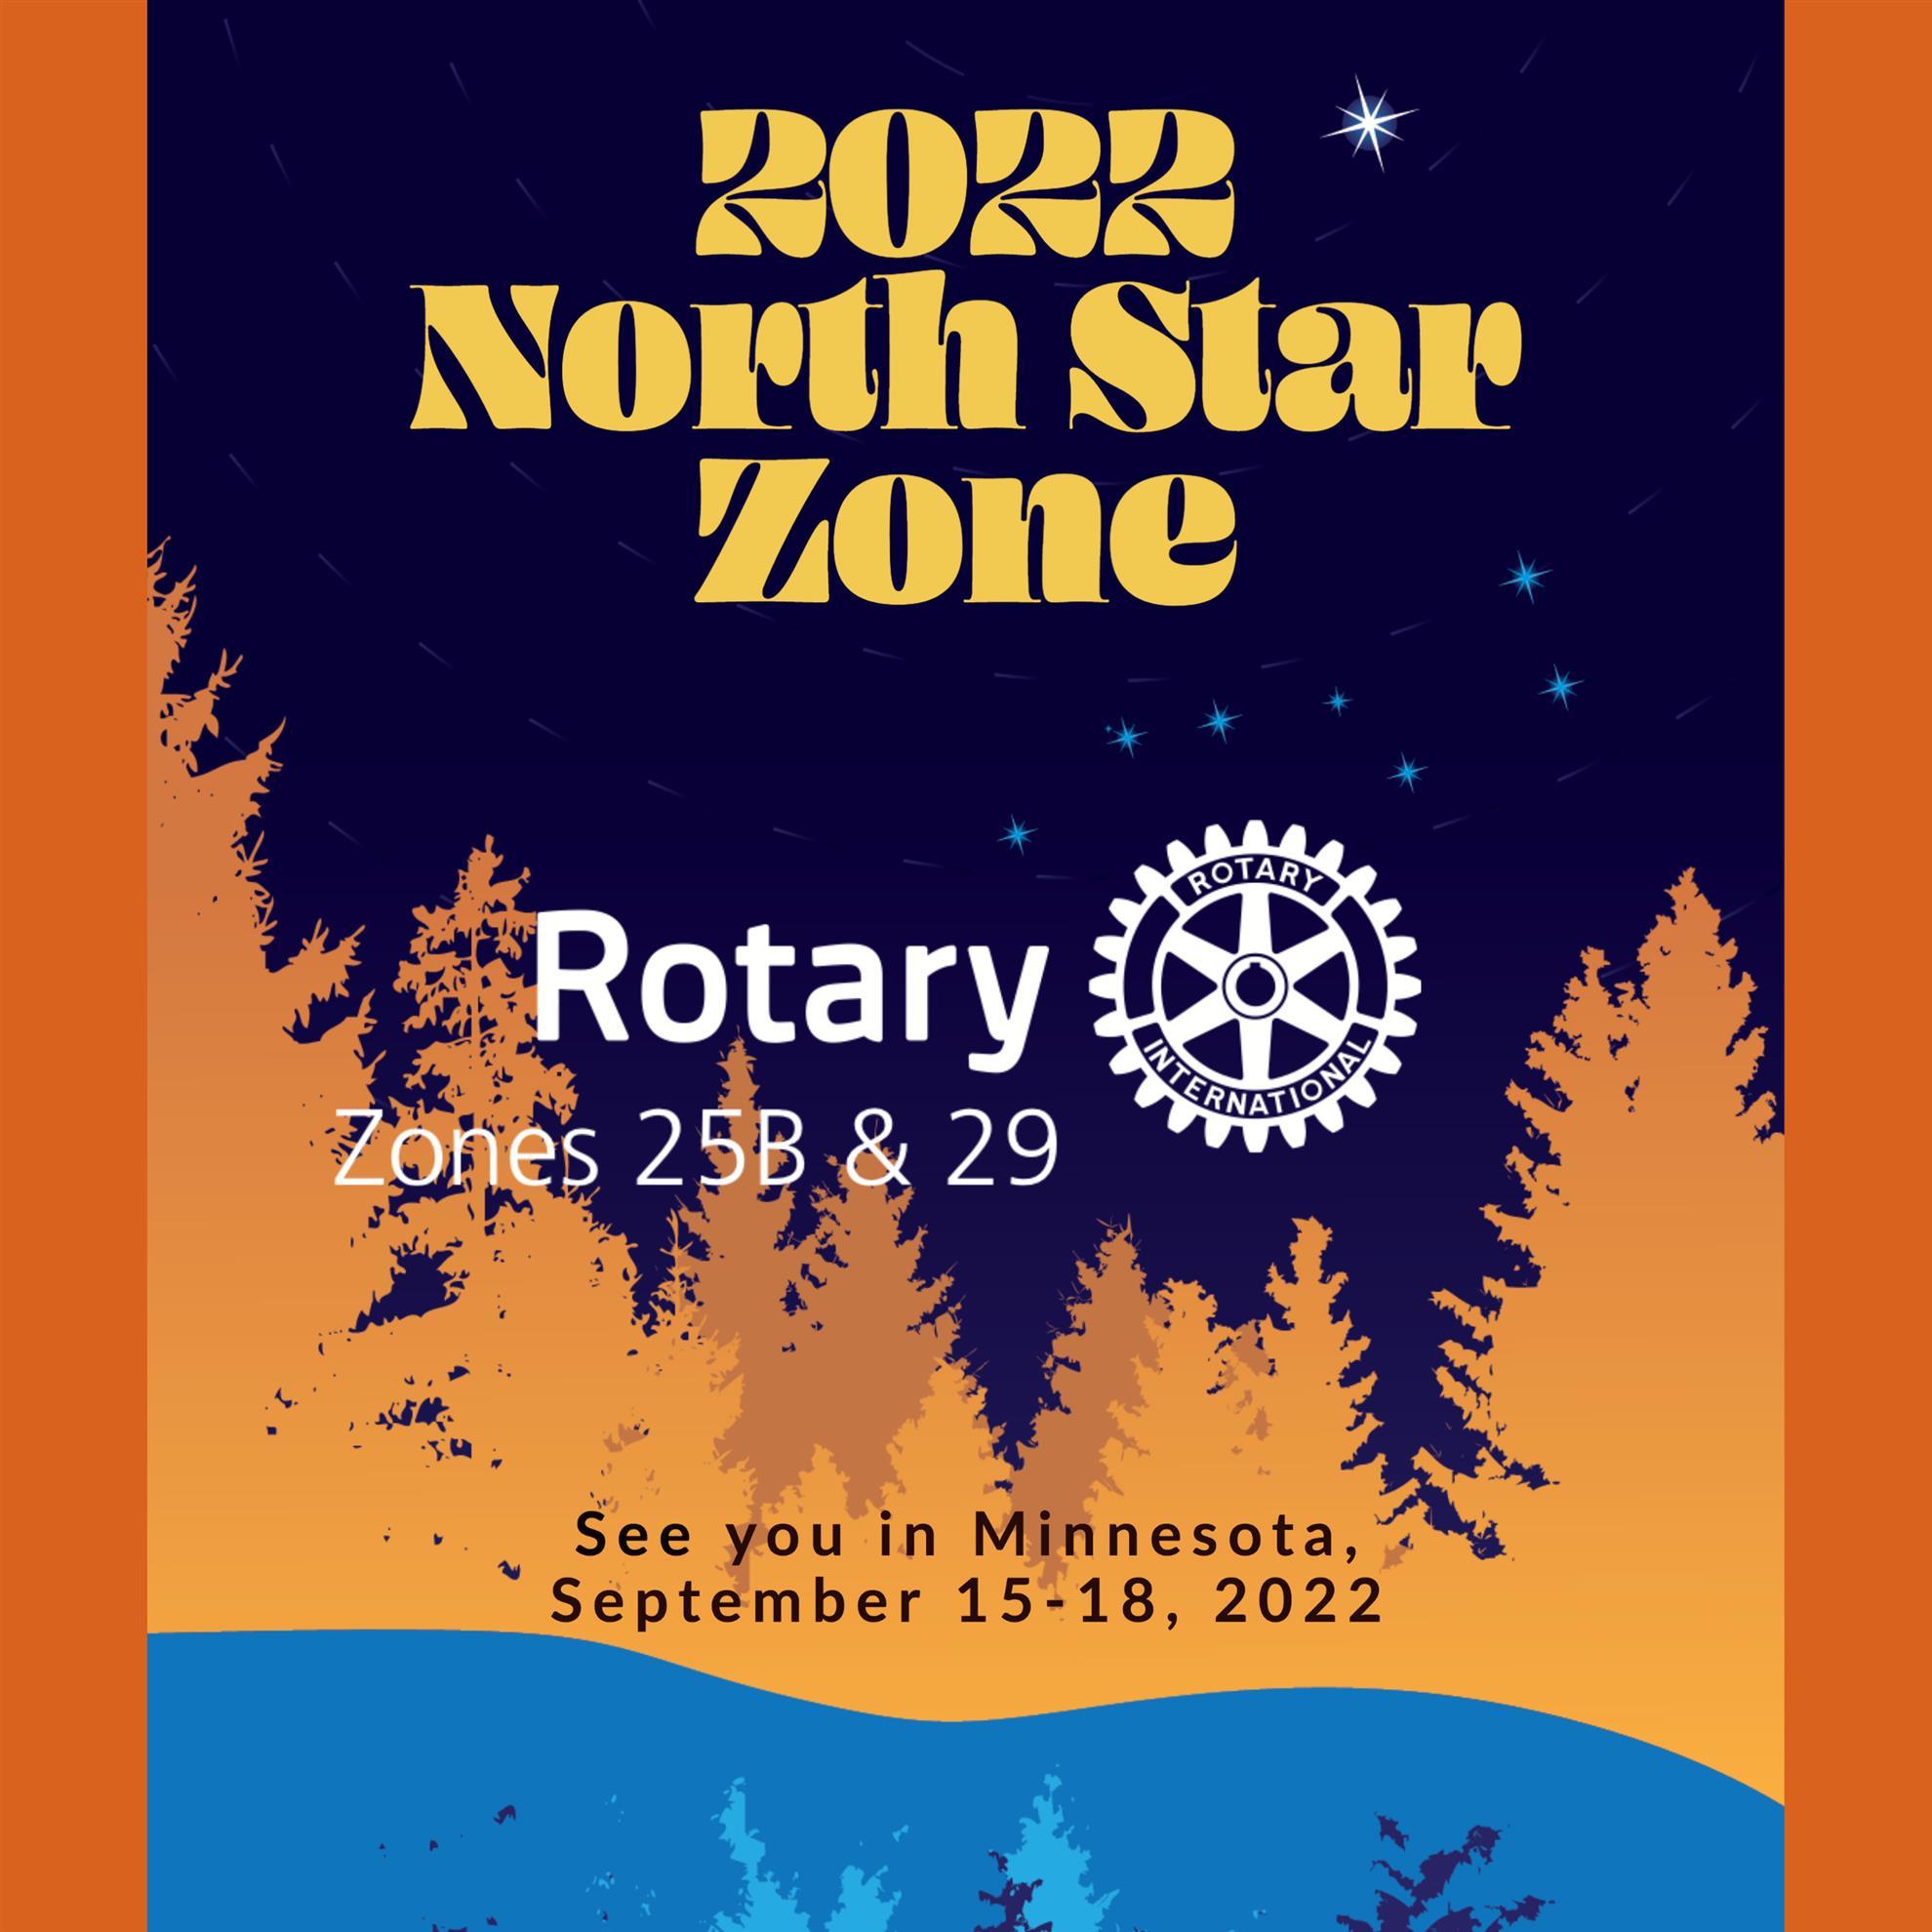 2022 North Star Zone Institute graphic